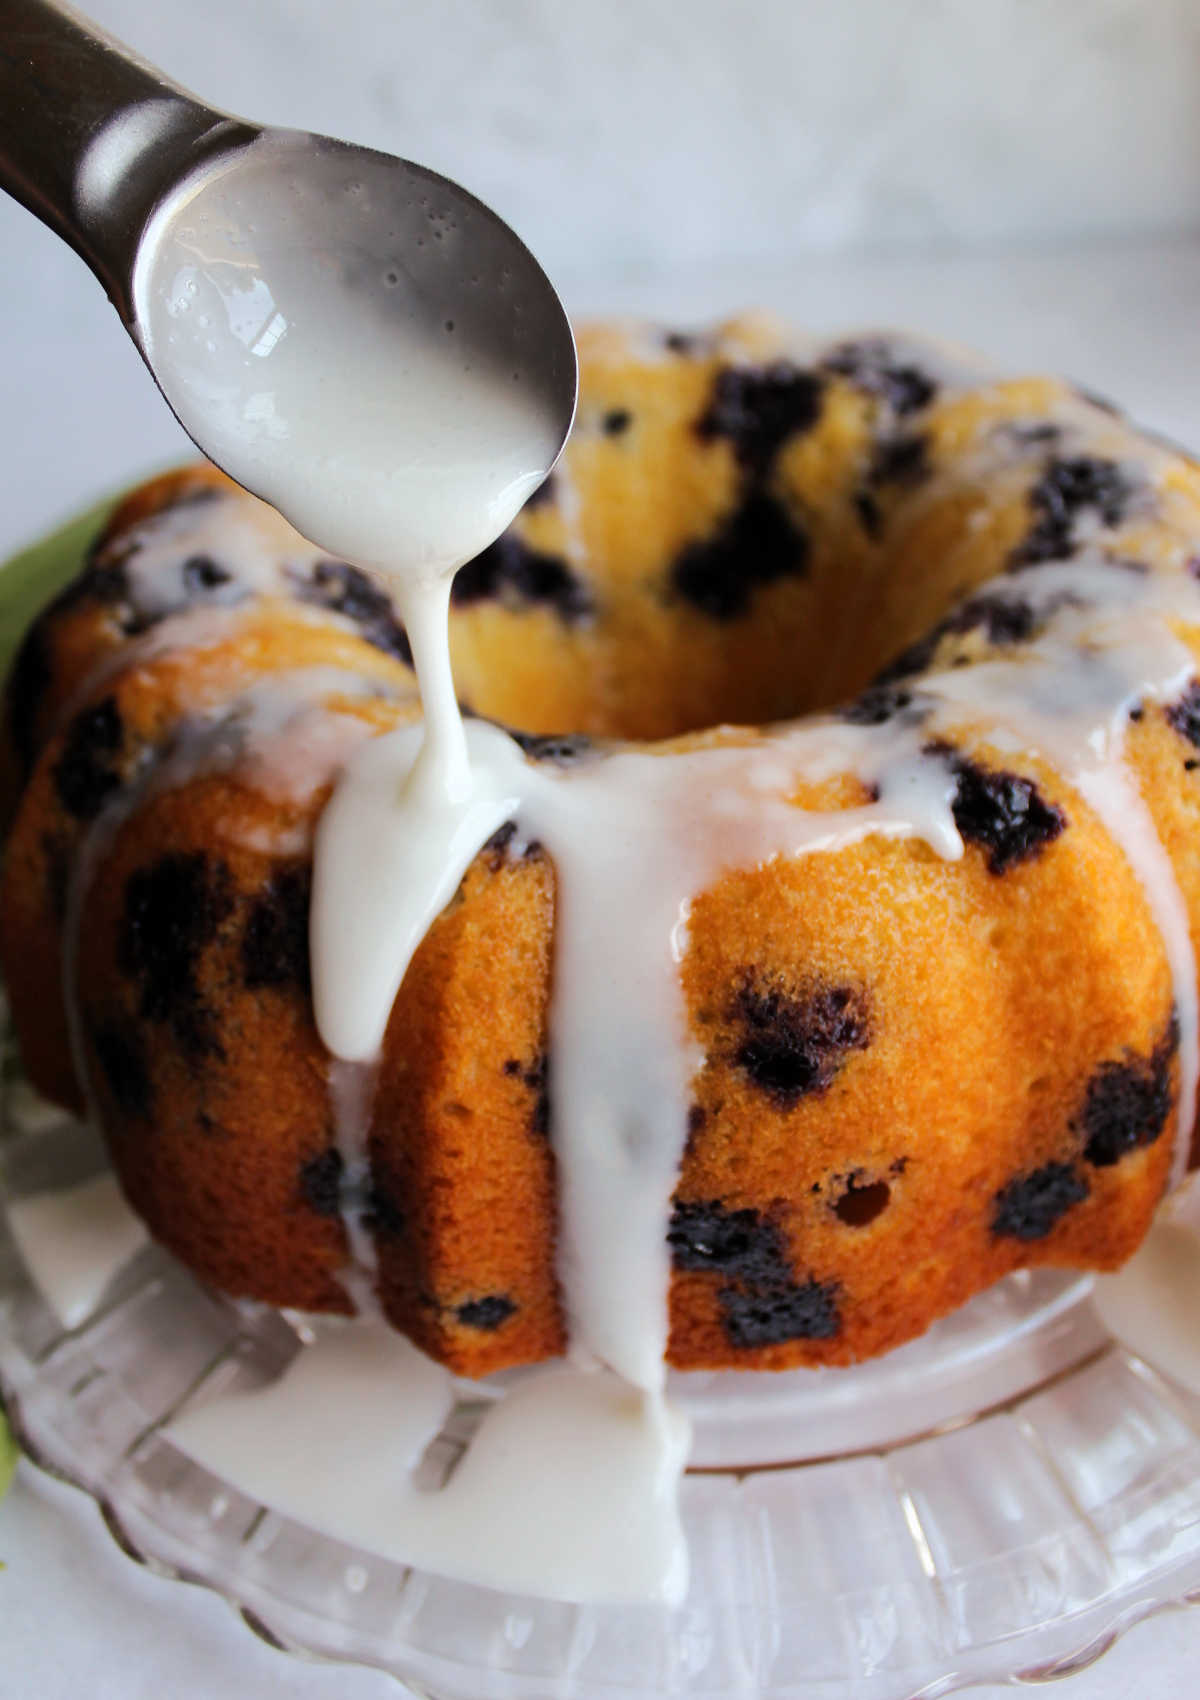 Spooning lemon and powdered sugar glaze over blueberry bundt cake.